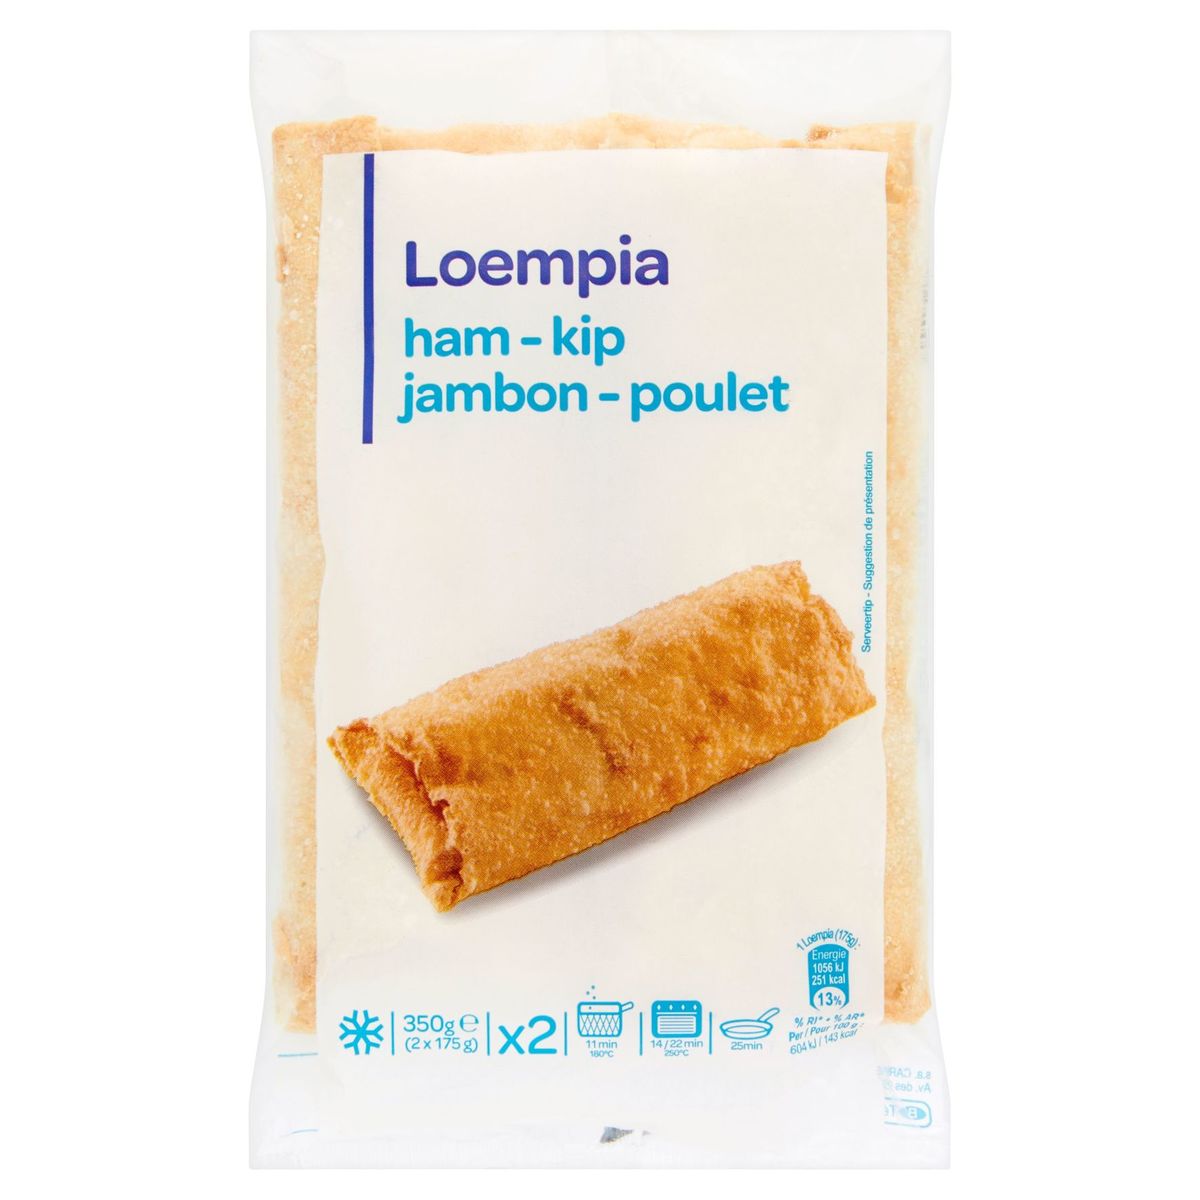 Loempia Jambon - Poulet 2 x 175 g